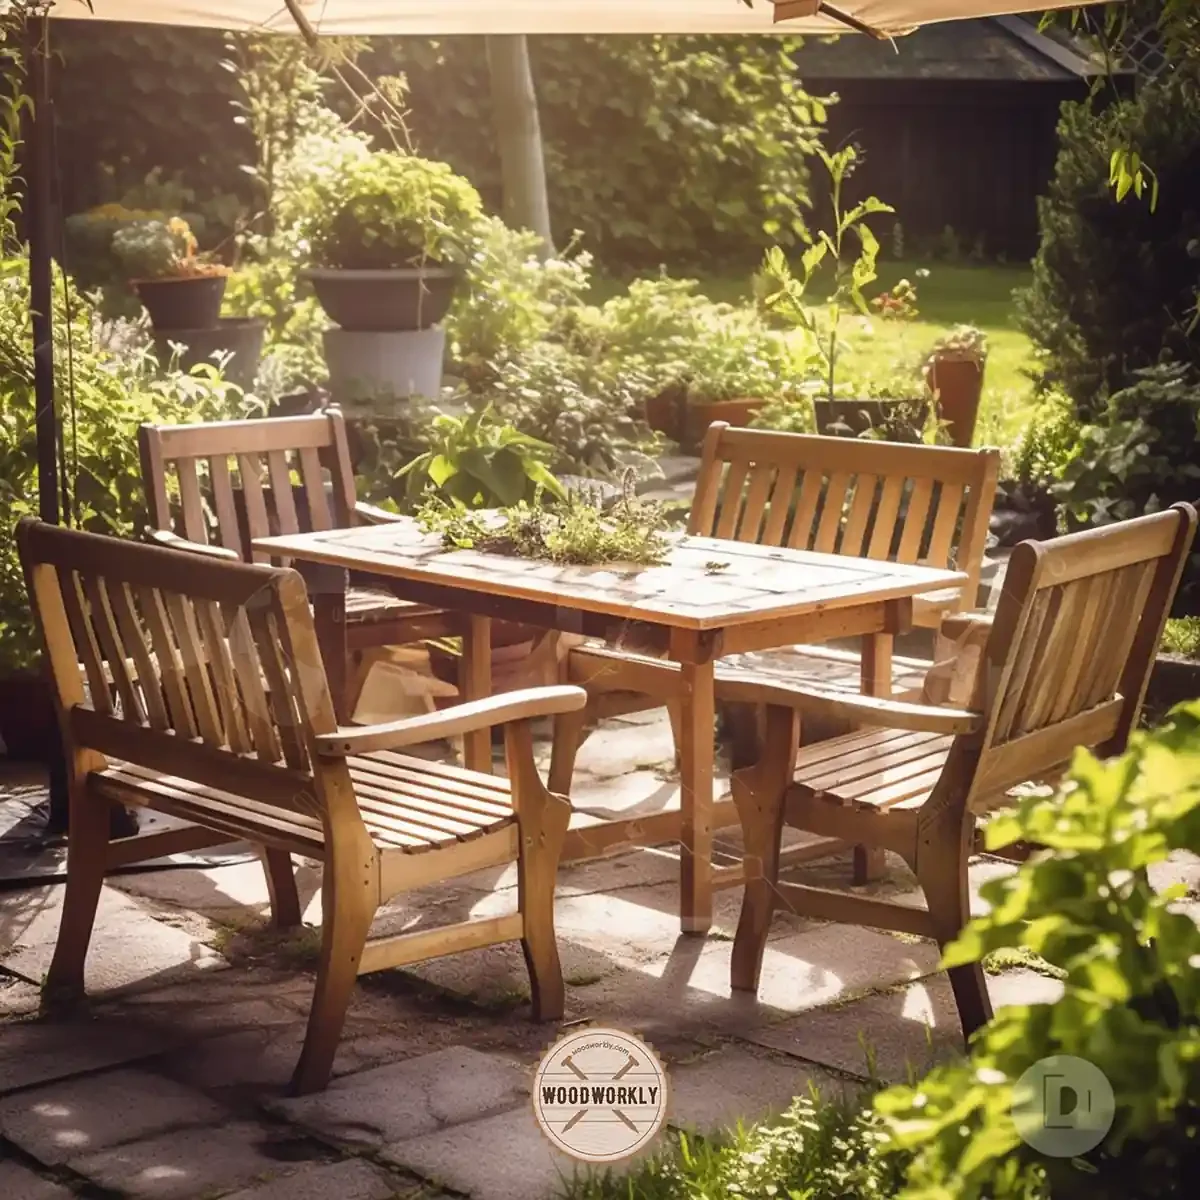 Wooden patio furniture under direct sunlight